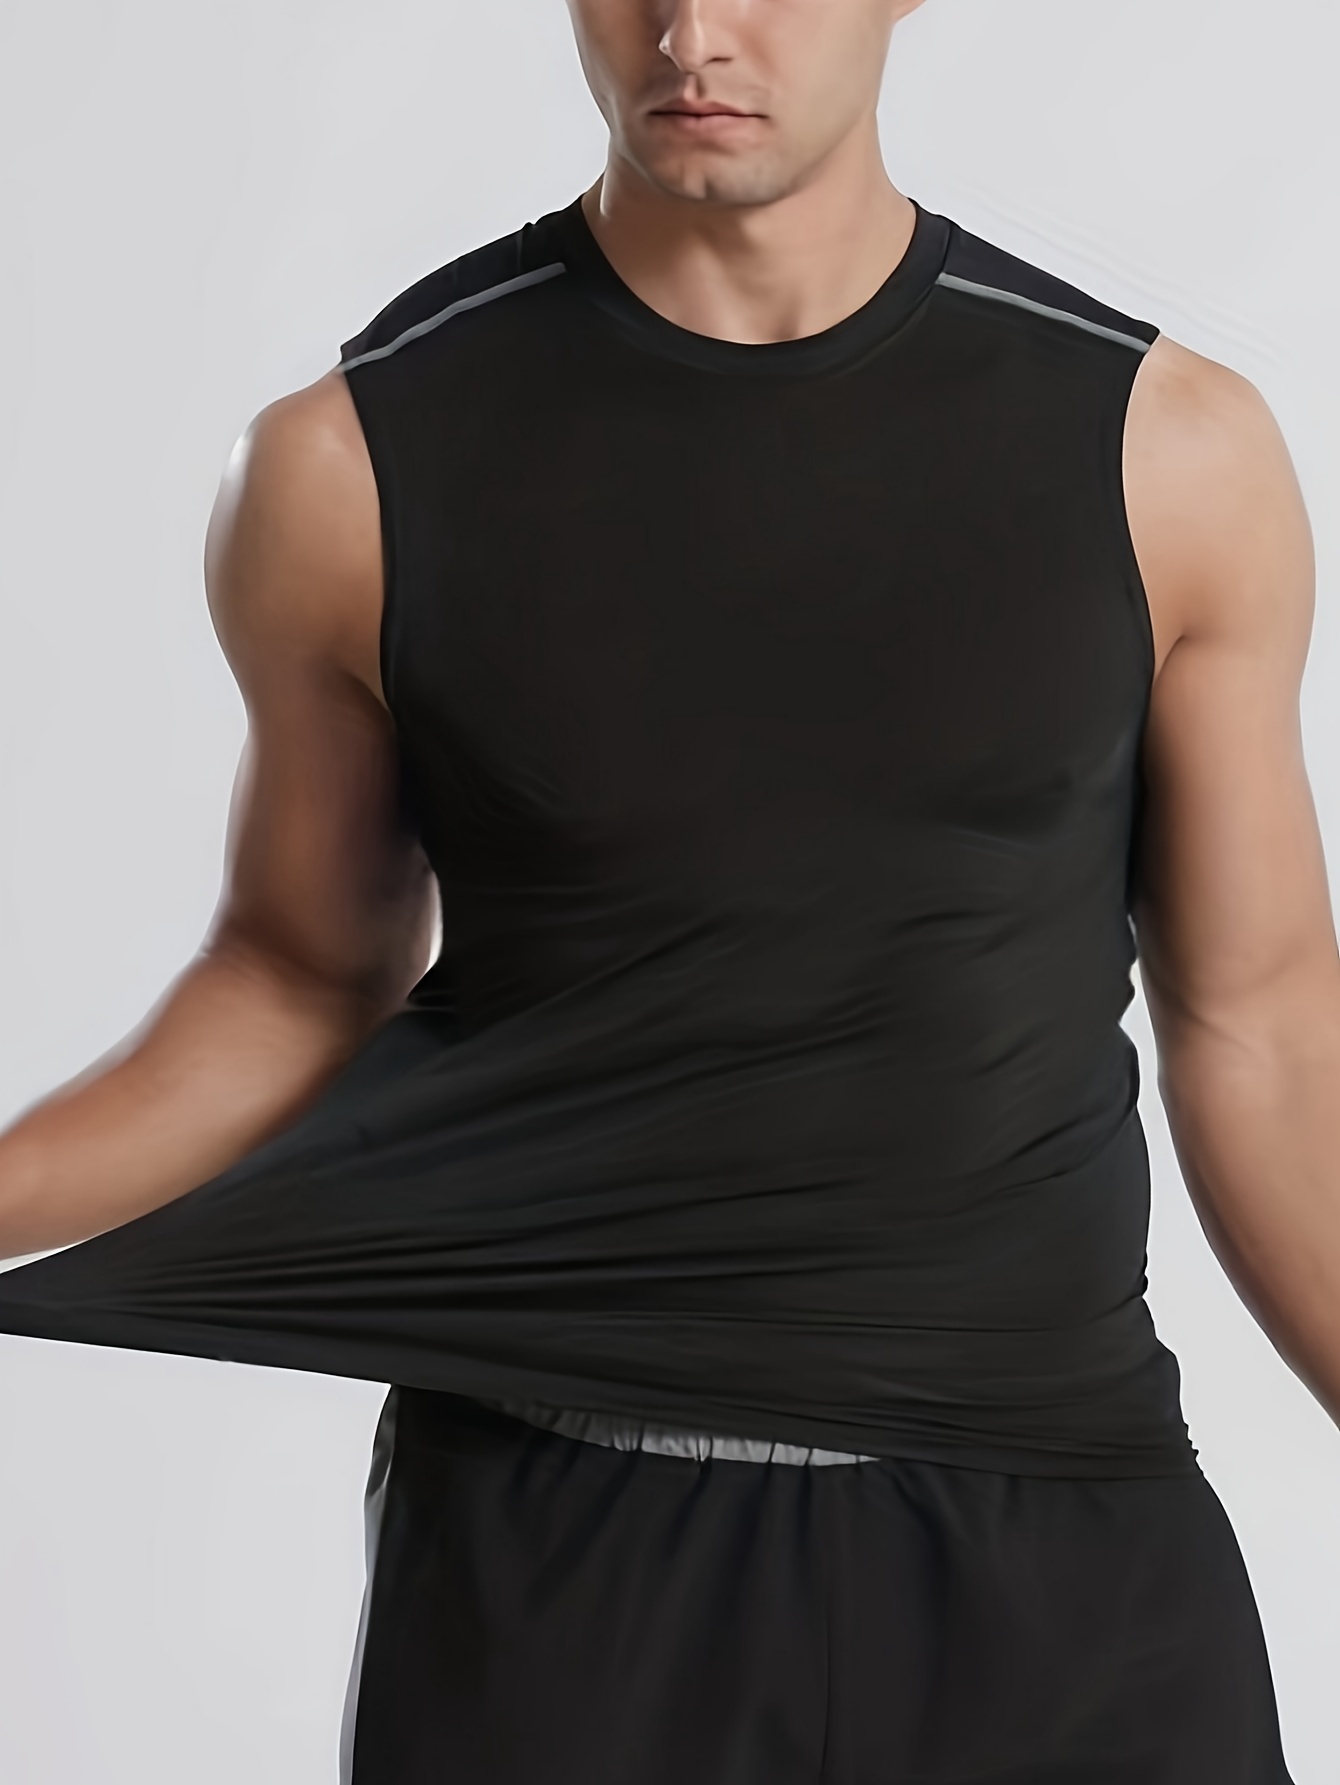 Junlan Men's Neoprene Weight Loss Sauna Shirt Suit Long Sleeve Hot Sweat  Body Shaper Tummy Fat Burner Slimming Workout Gym Yoga (Black, S), Sauna  Suits -  Canada